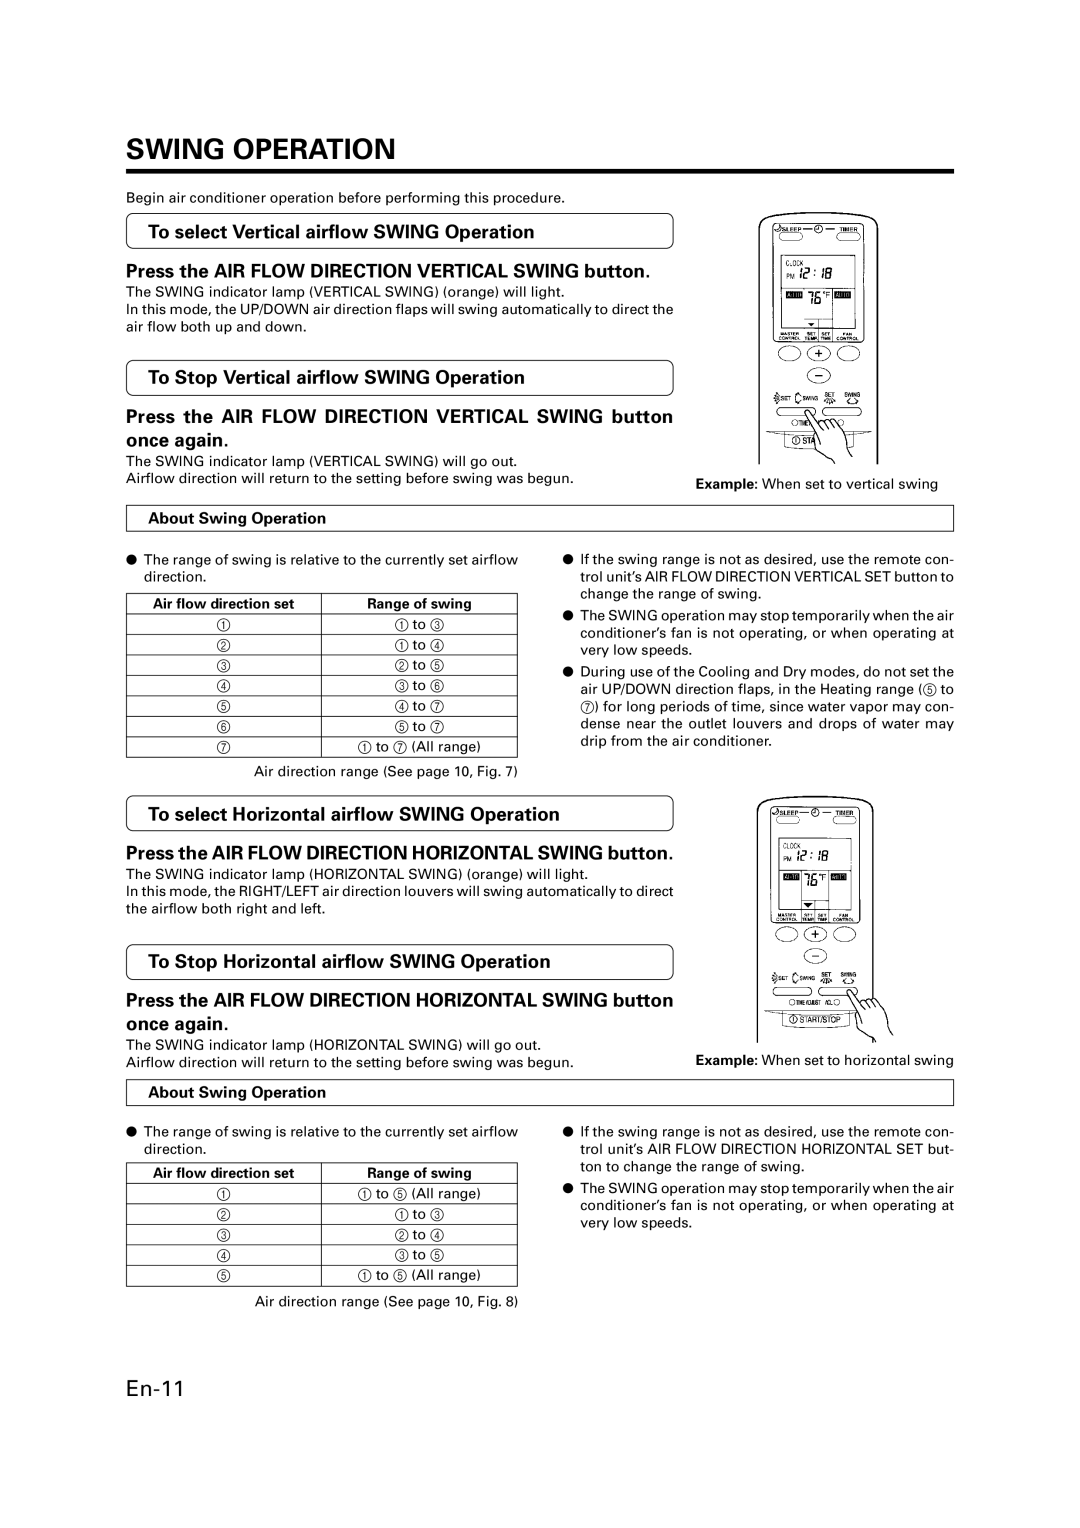 Fujitsu P/N9359944058 manual About Swing Operation, Air flow direction set Range of swing 